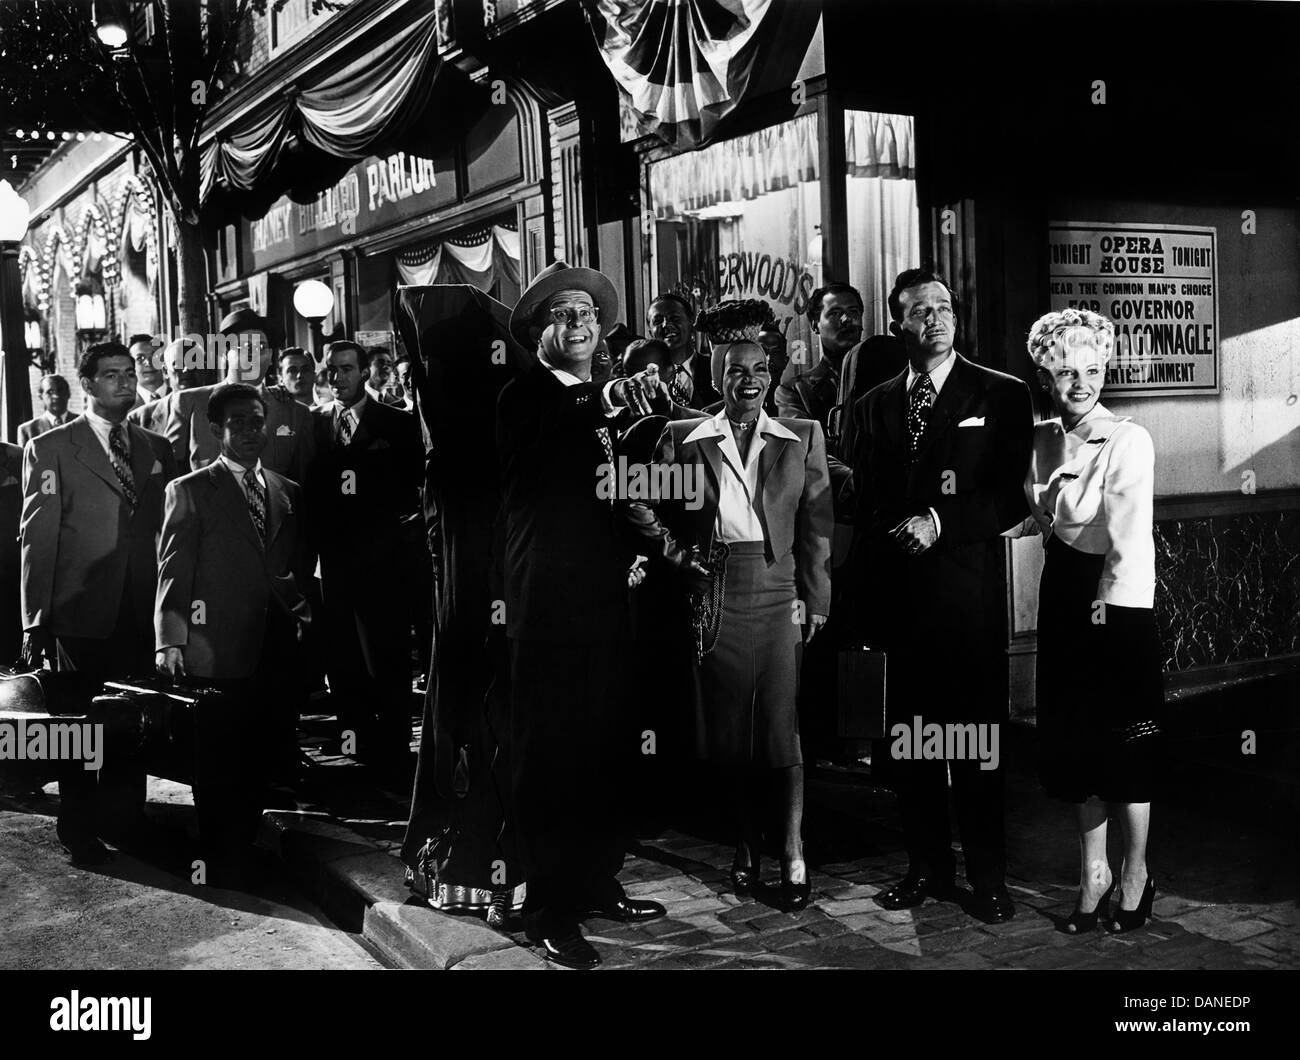 IF I'M LUCKY (1945) PHIL SILVERS CARMEN MIRANDA HARRY JAMES VIVIAN BLAINE LEWIS SEILER (DIR) IFIL 001 Stock Photo